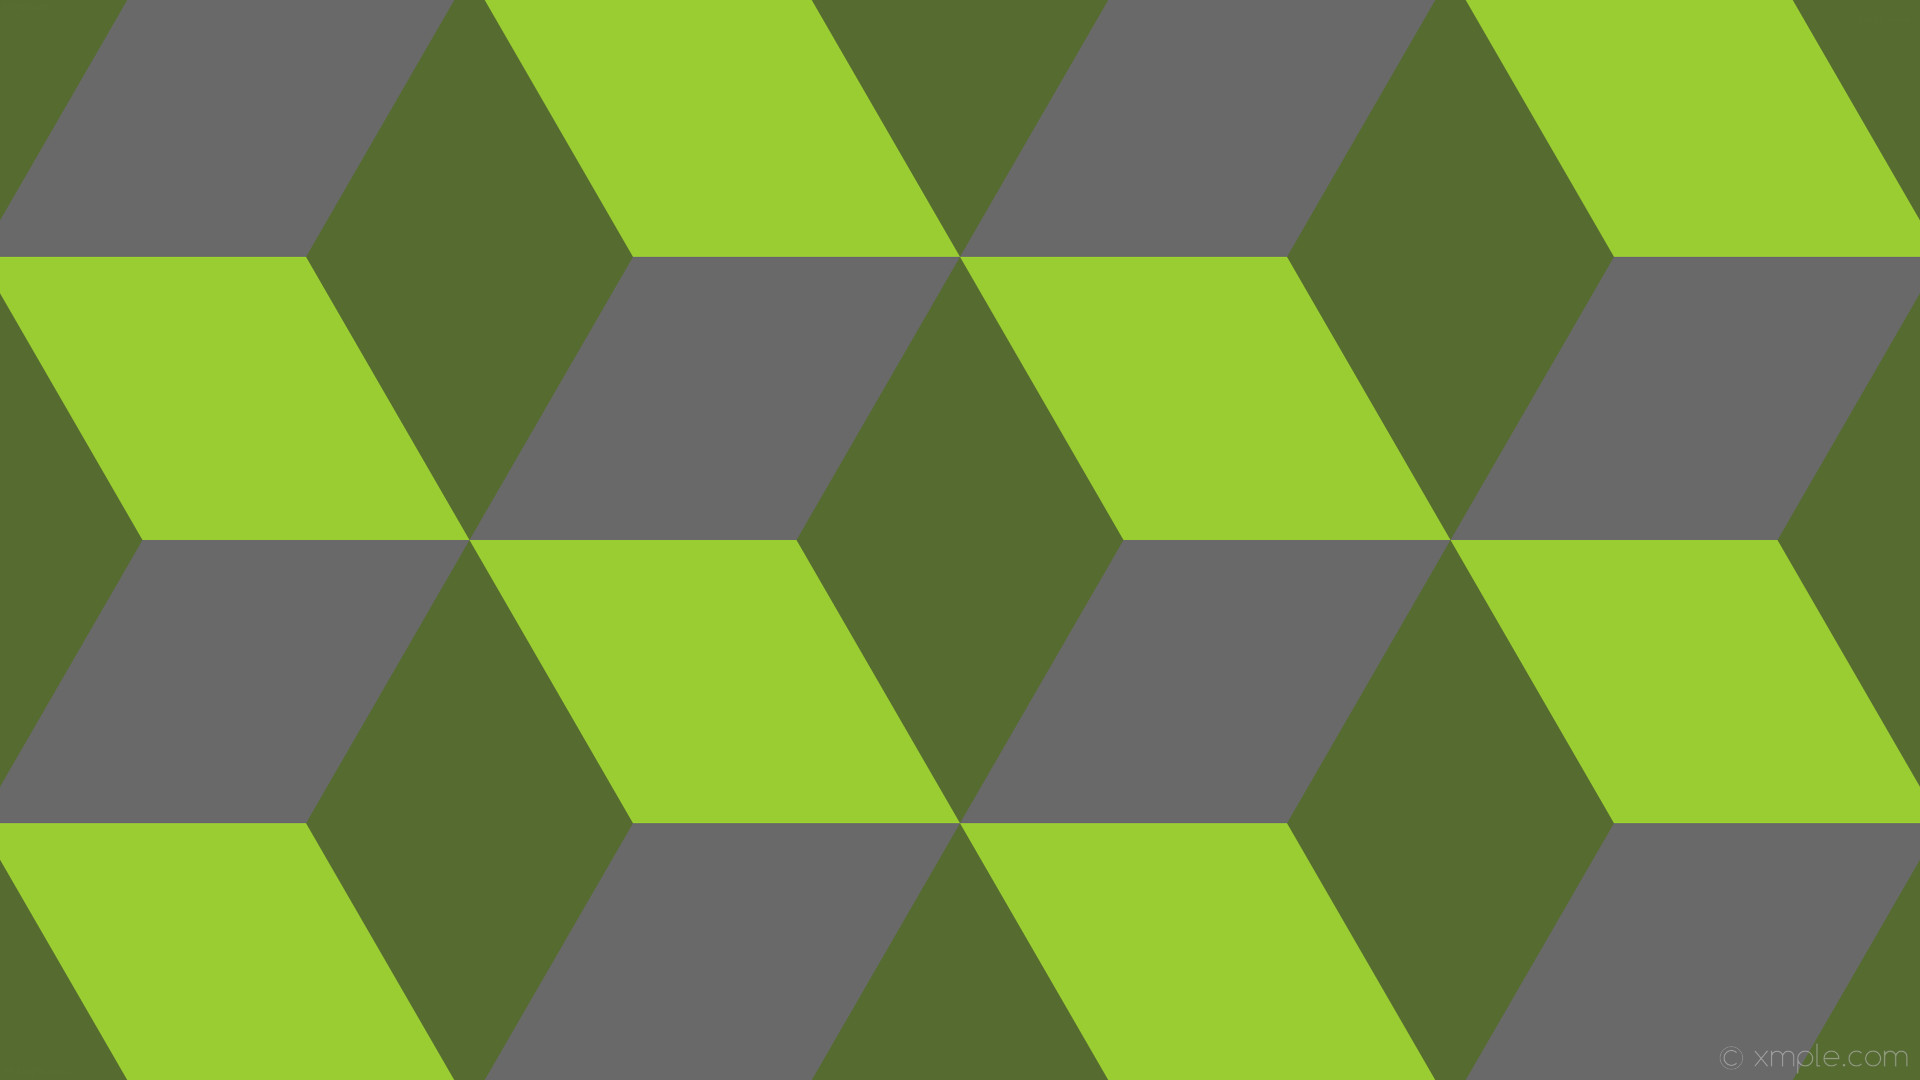 1920x1080 wallpaper green 3d cubes grey dark olive green dim gray yellow green  #556b2f #696969